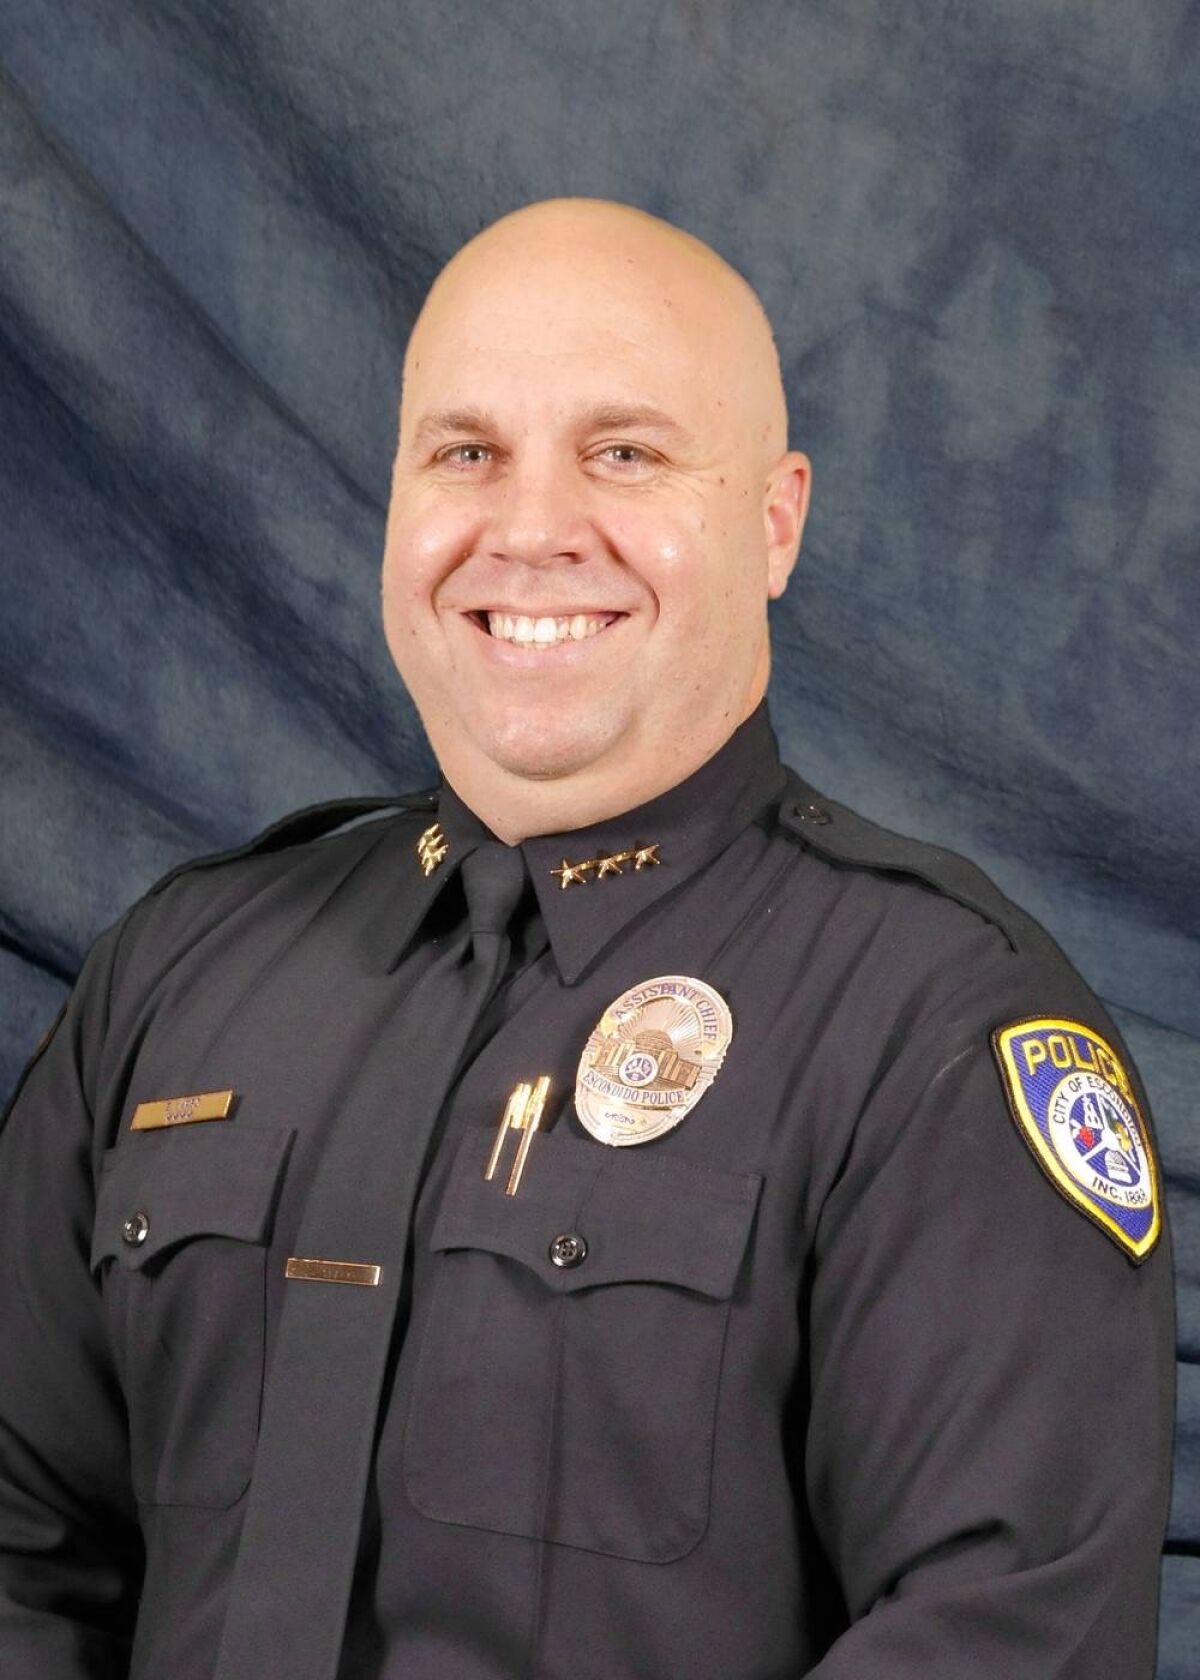 Escondido Police Chief Ed Varso